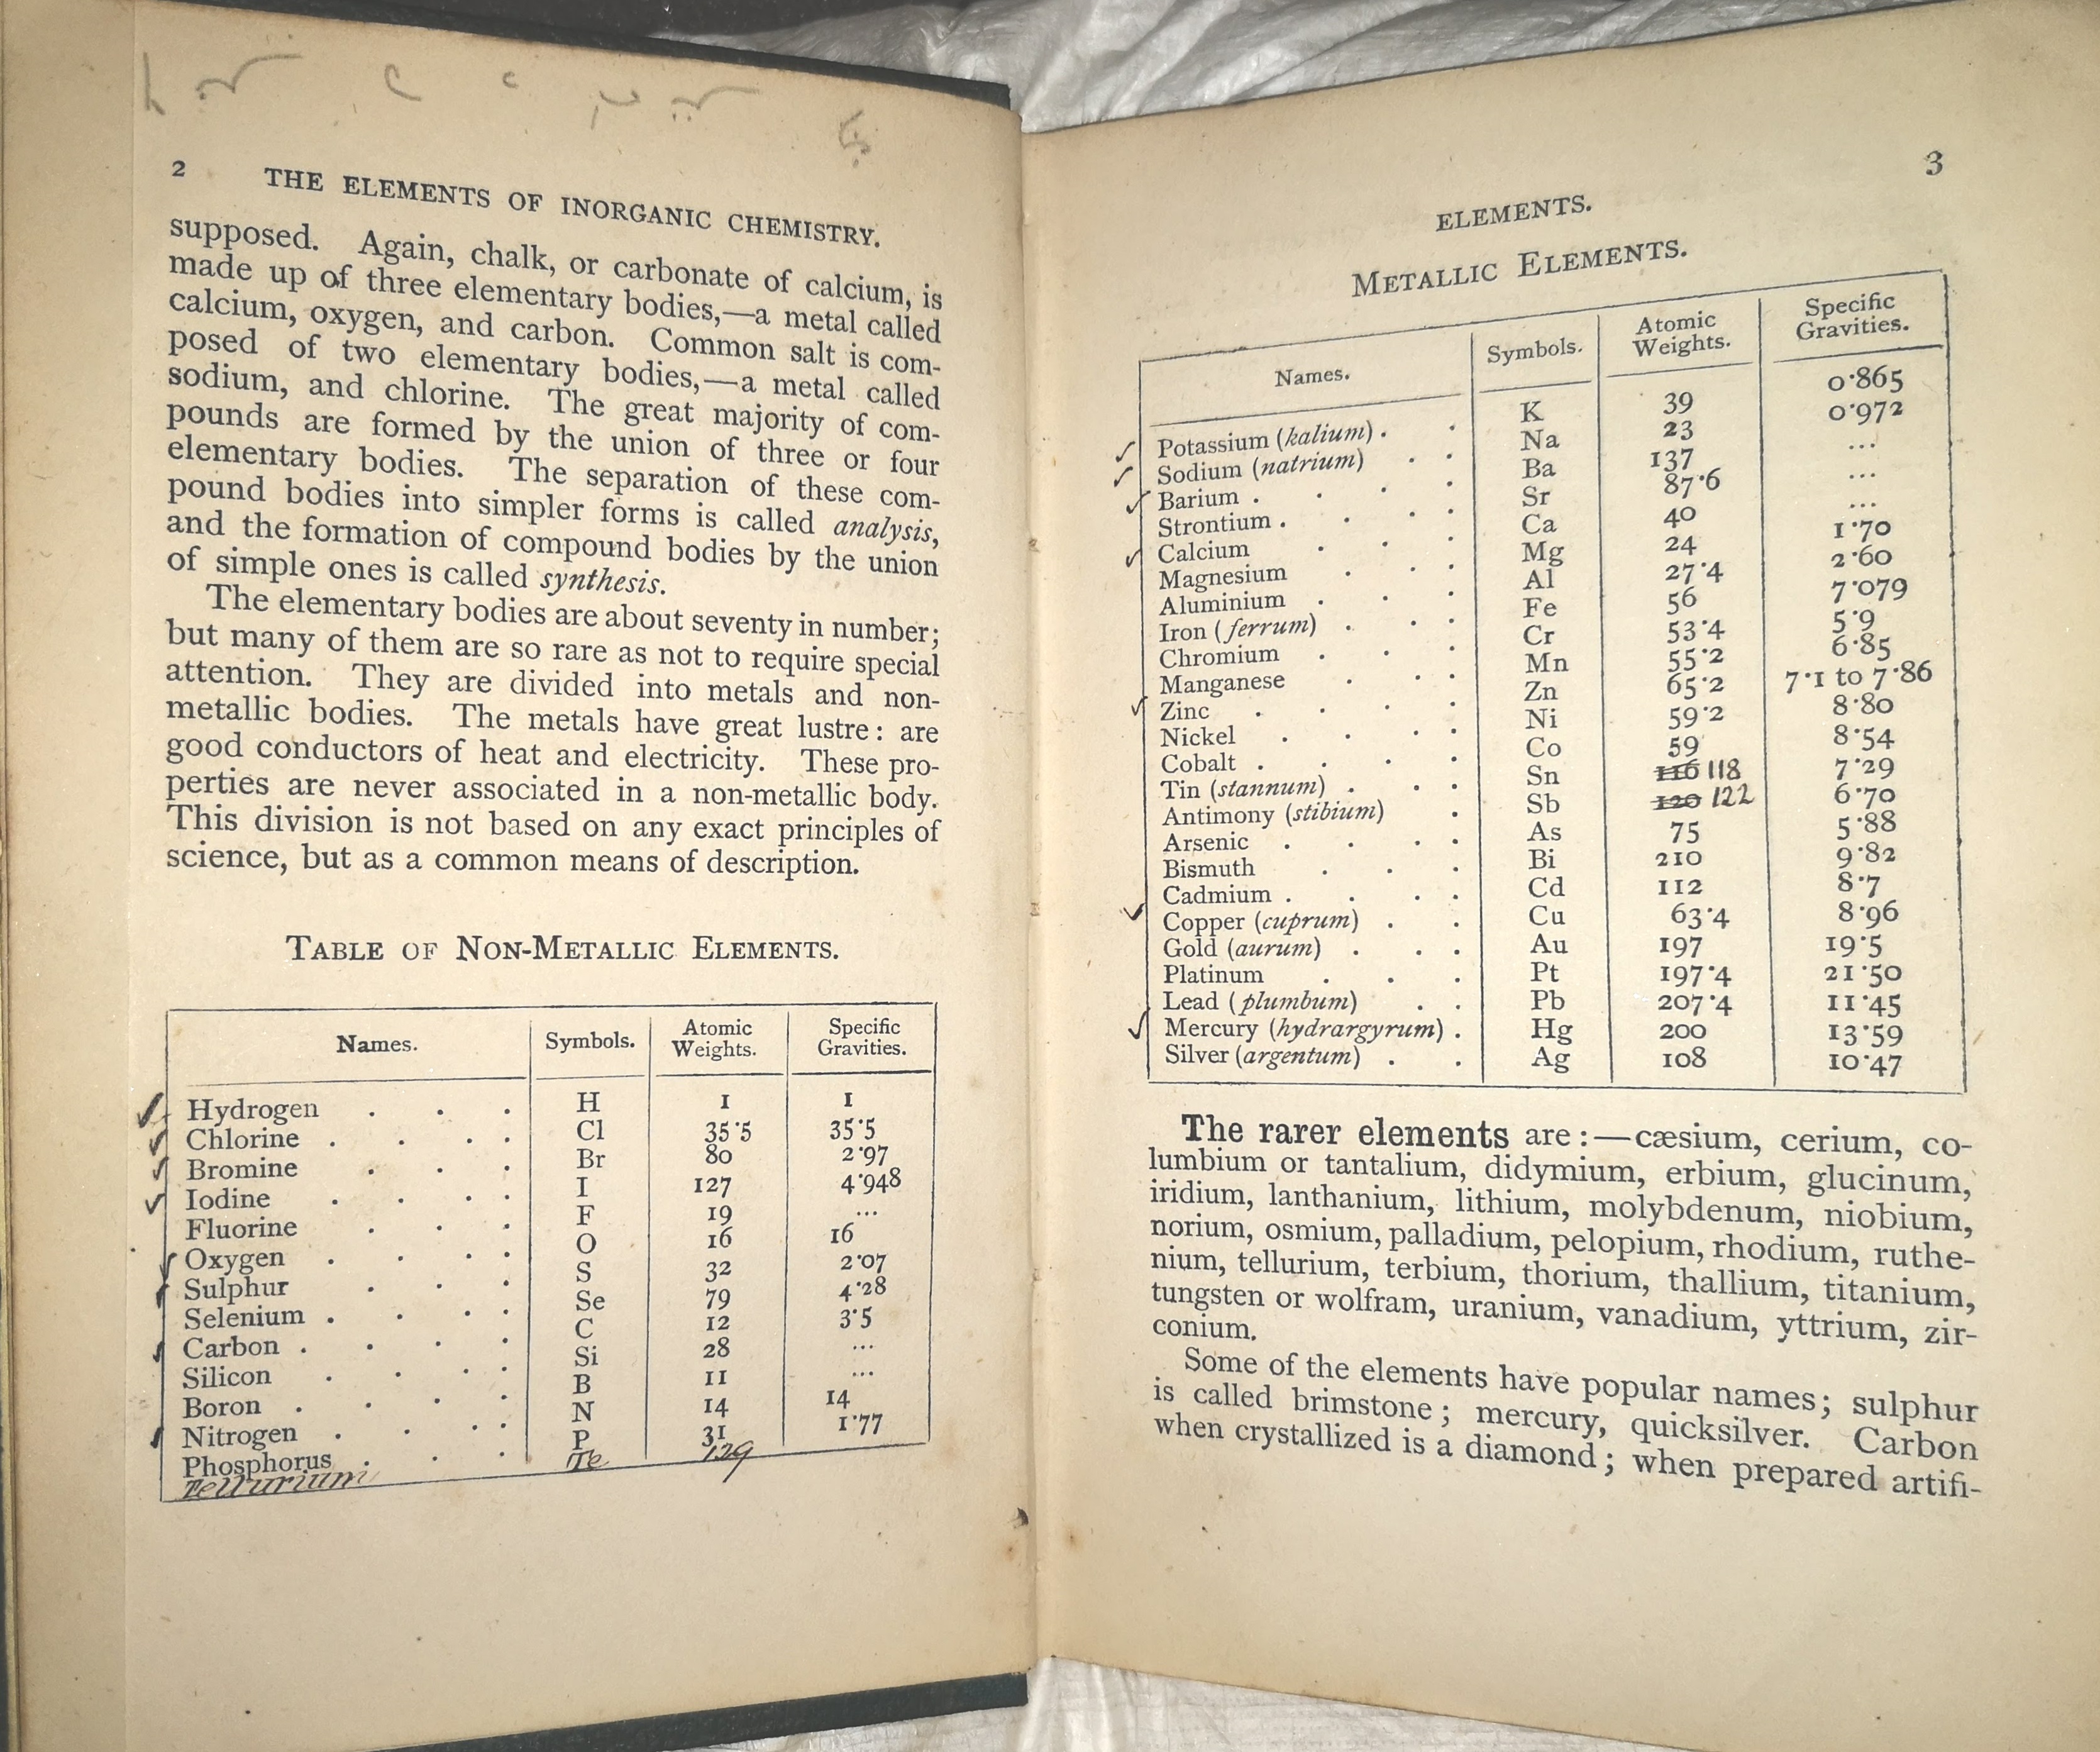 Buckmaster, J. (1867). The elements of chemistry : Inorganic and organic (4th ed.). London: Longman.